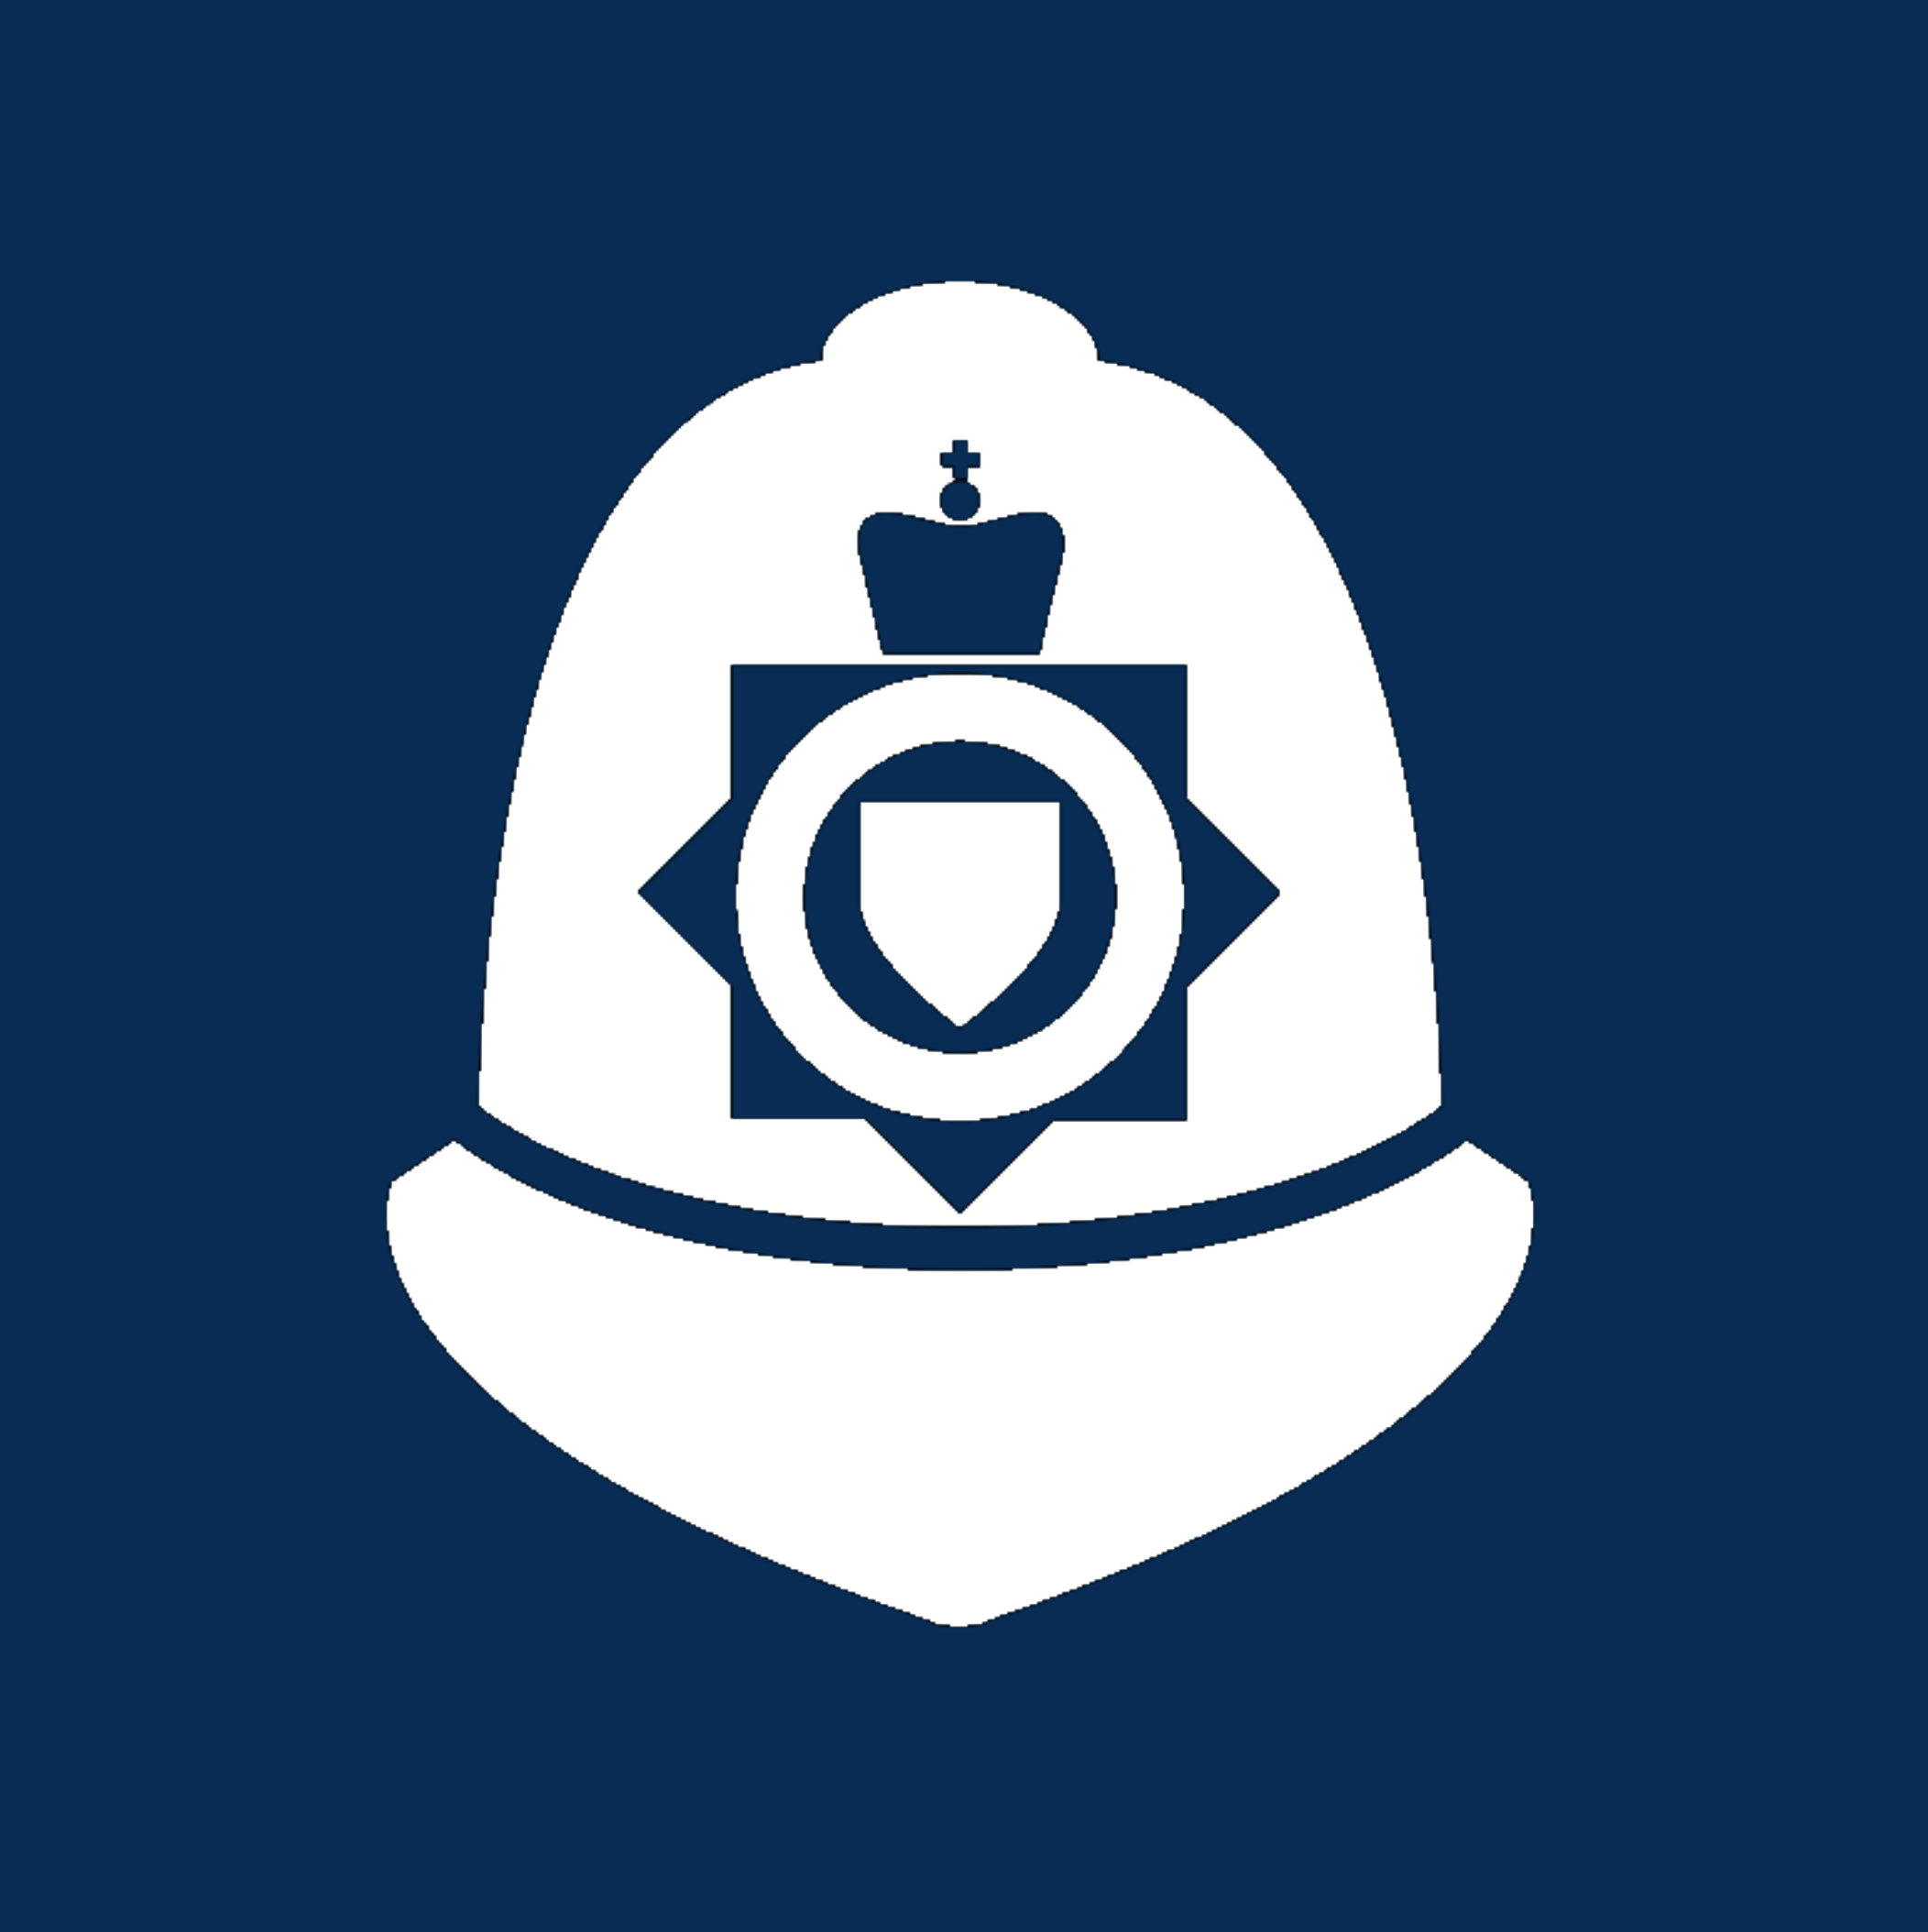 Crimefighters logo - a police helmet